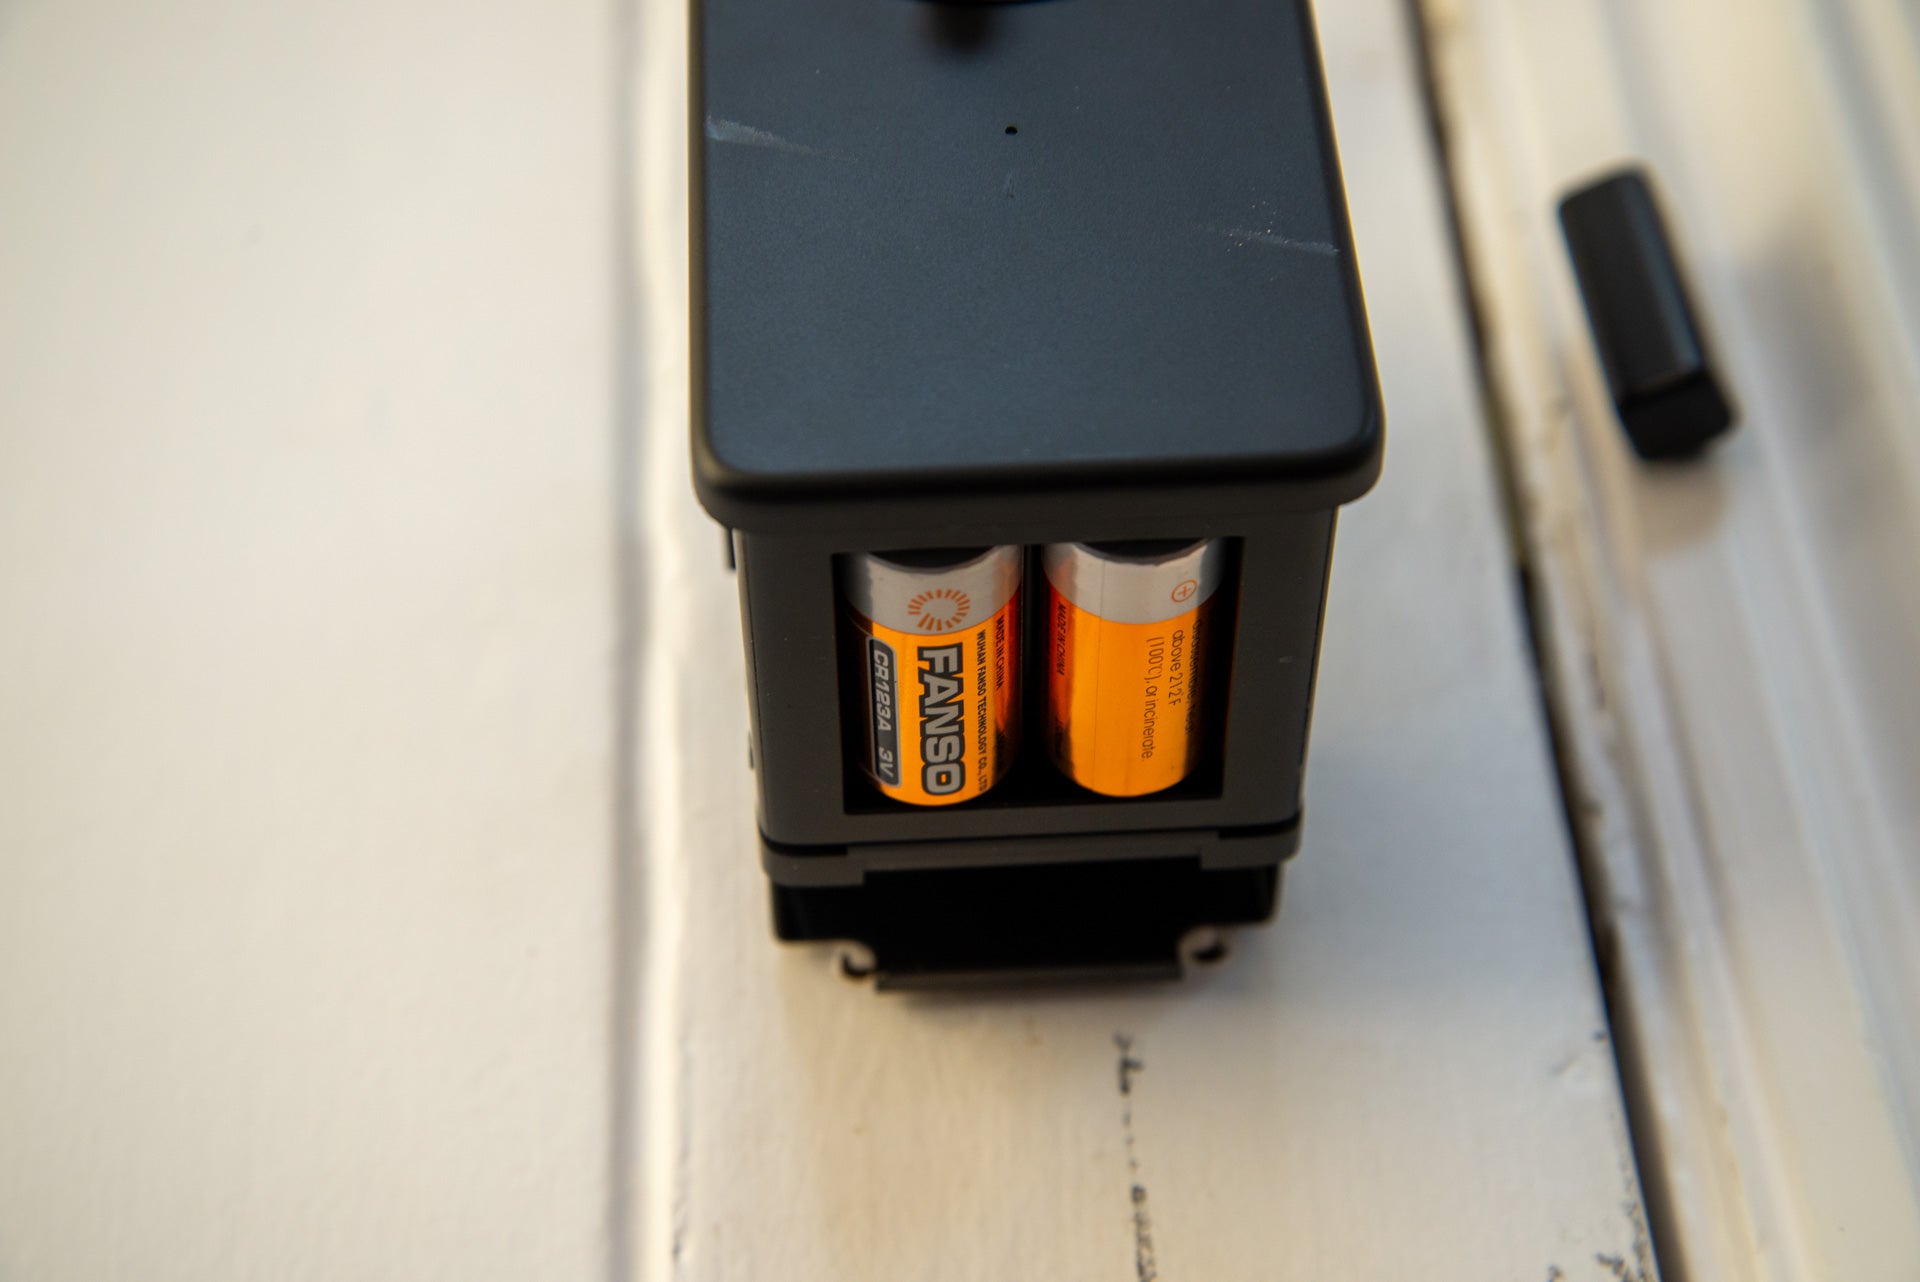 SwitchBot Lock batteries